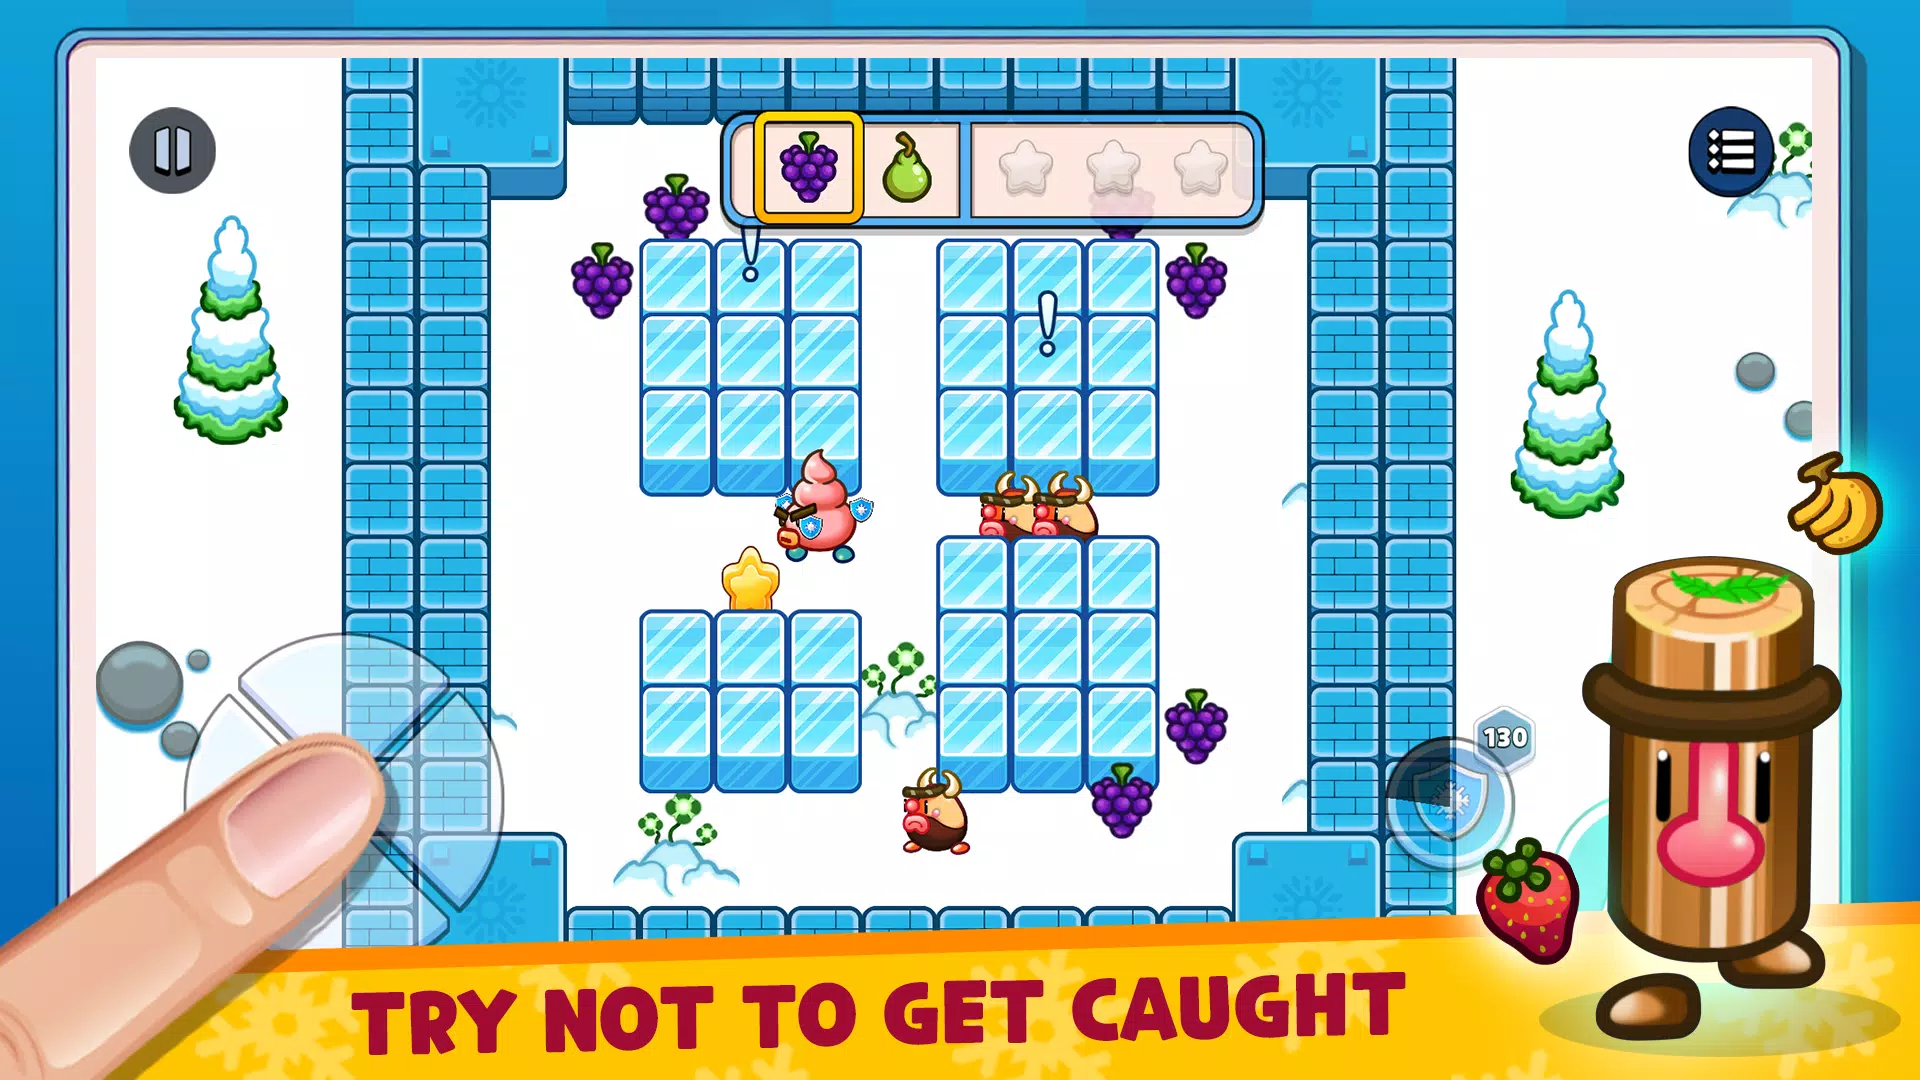 Bad Ice Cream Mobile - friv bad Icy war Maze Game APK - Baixar app grátis  para Android